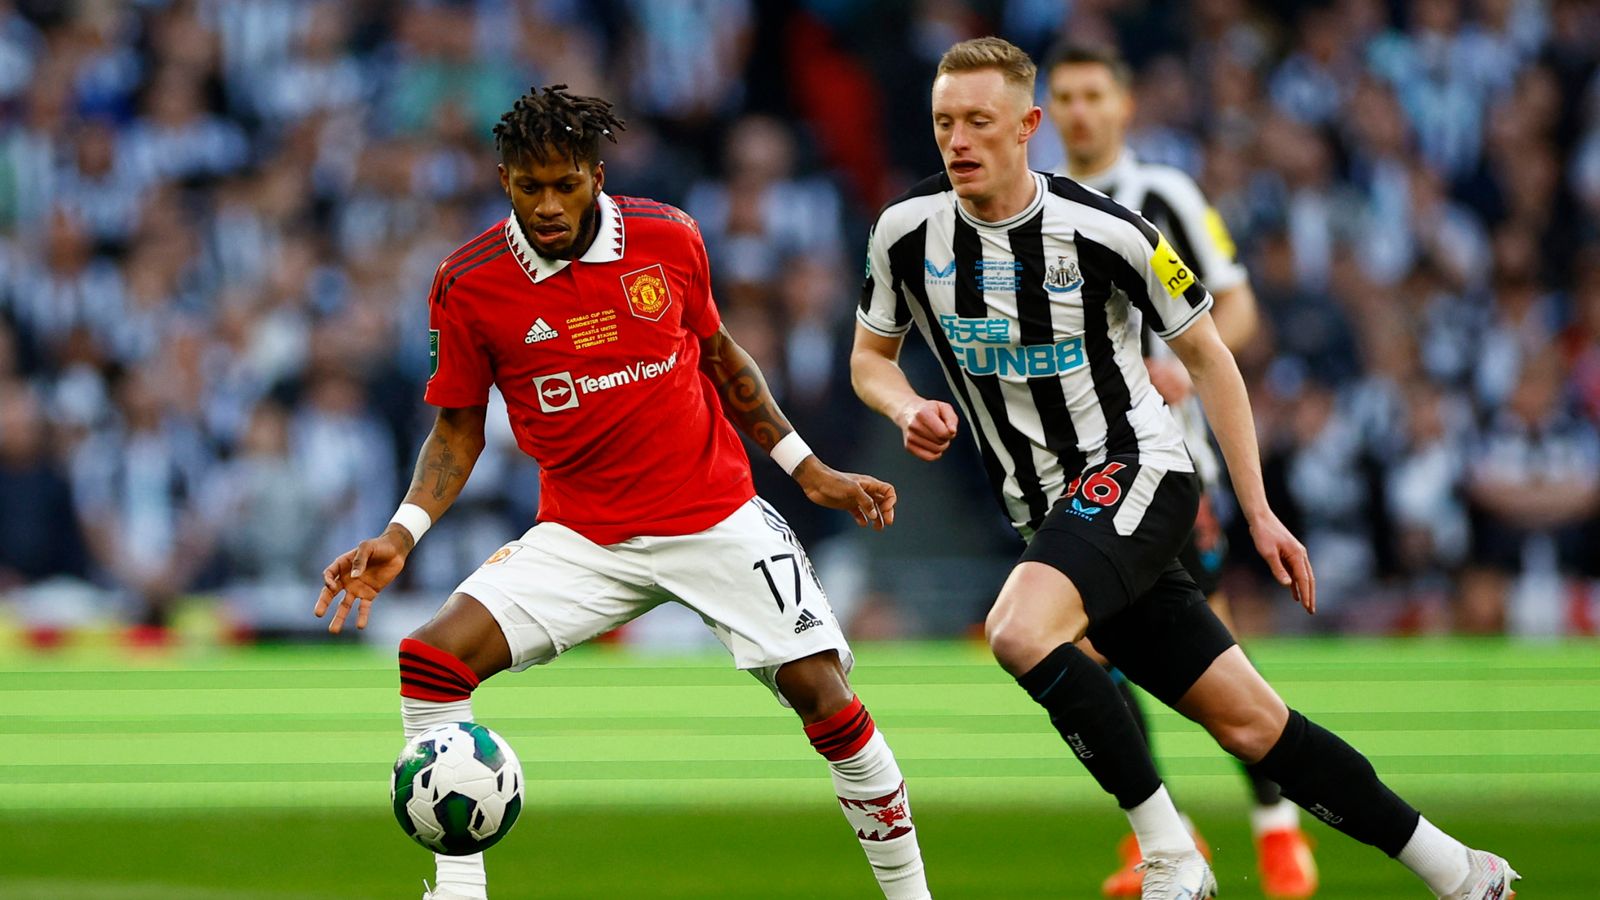 Casemiro and Rashford goals put Man Utd in control against Newcastle Utd in Carabao Cup final – live